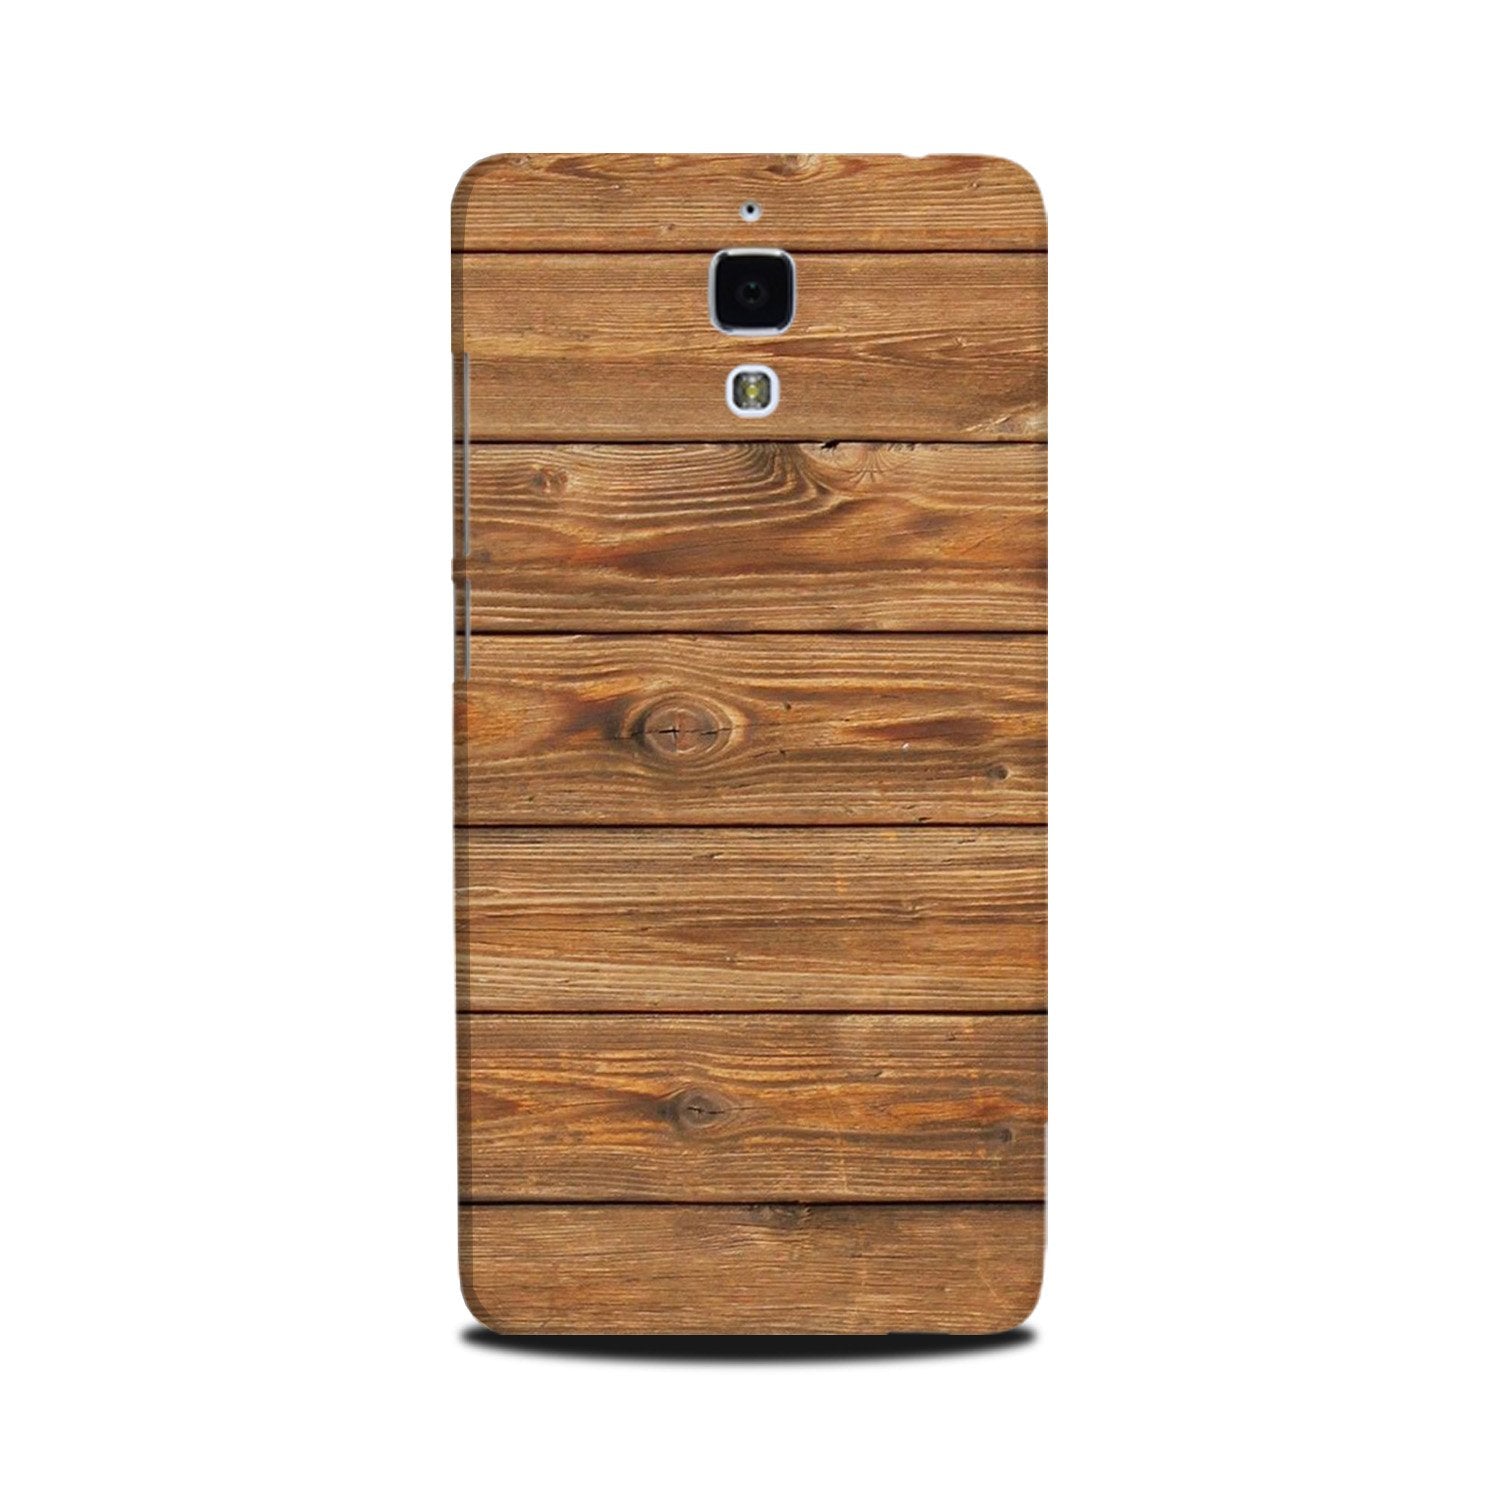 Wooden Look Case for Mi 4(Design - 113)